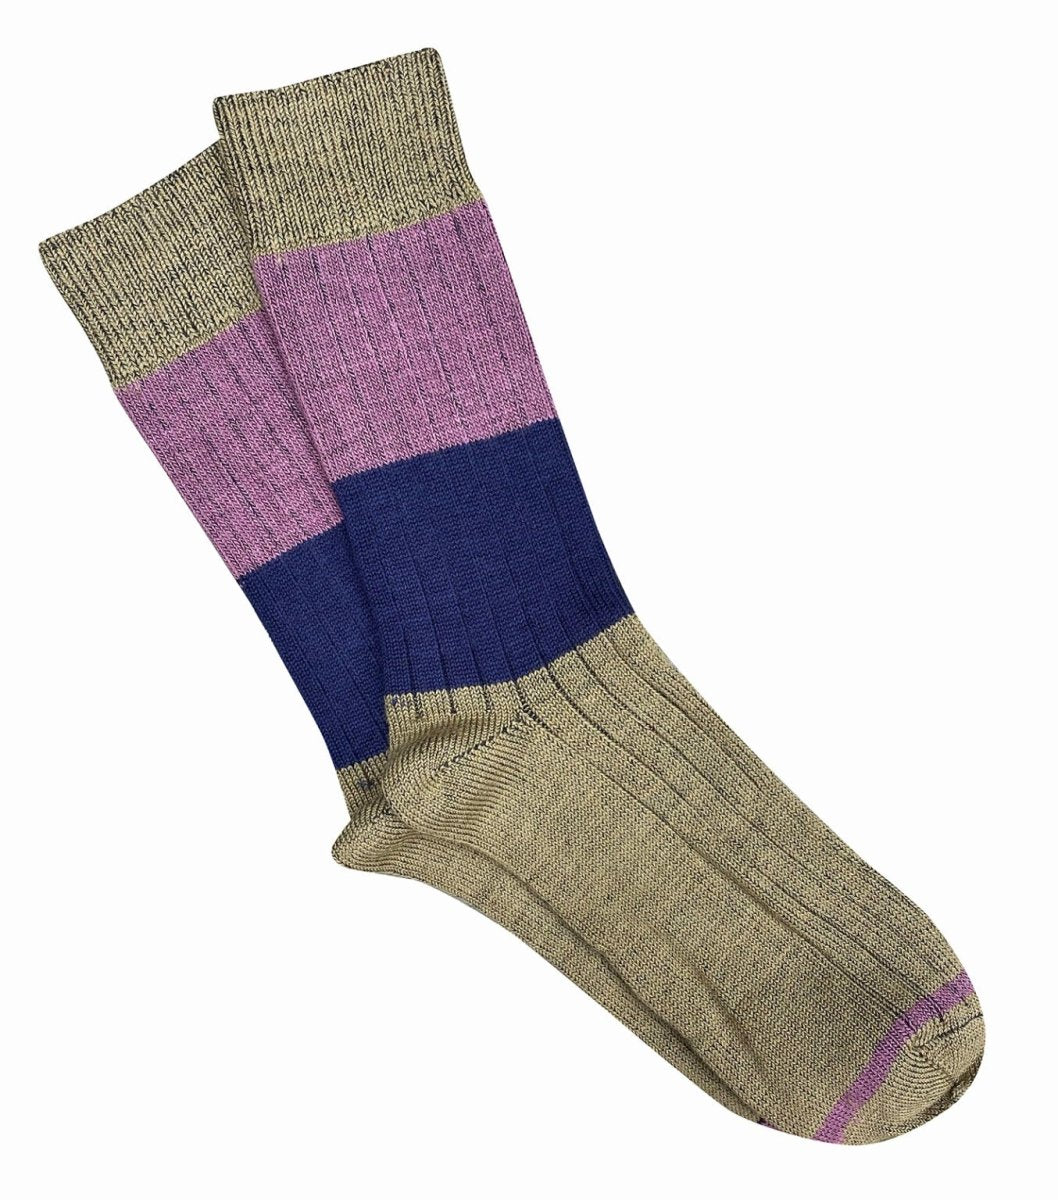 Tightology Merino Wool Socks - Chunky-Tightology-Socks-Jade and May